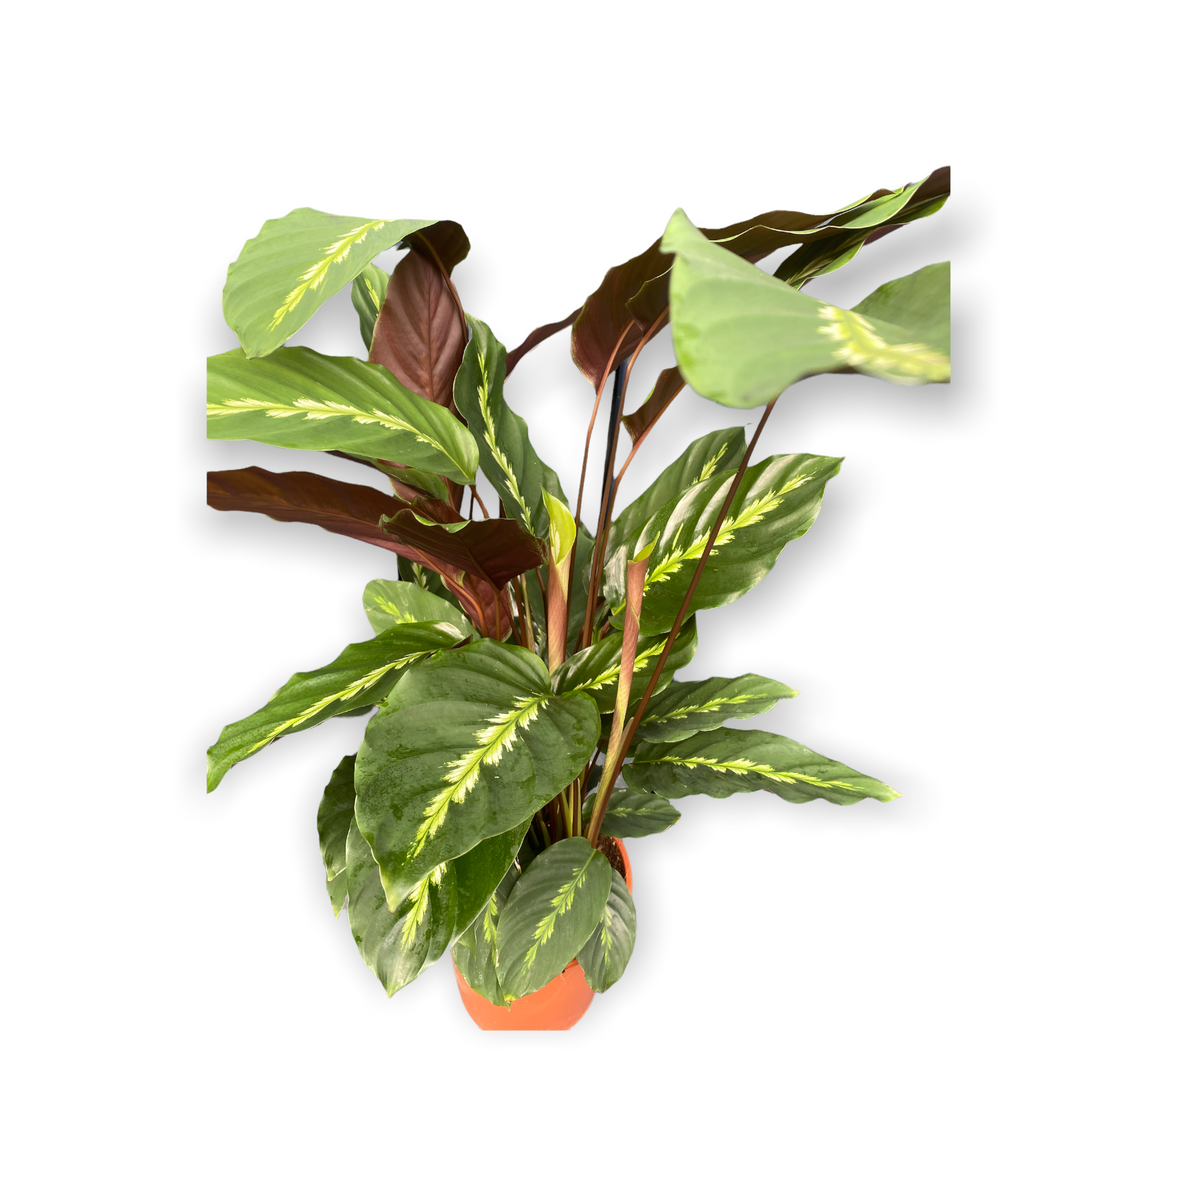 Calethea Plant - Maui Queen